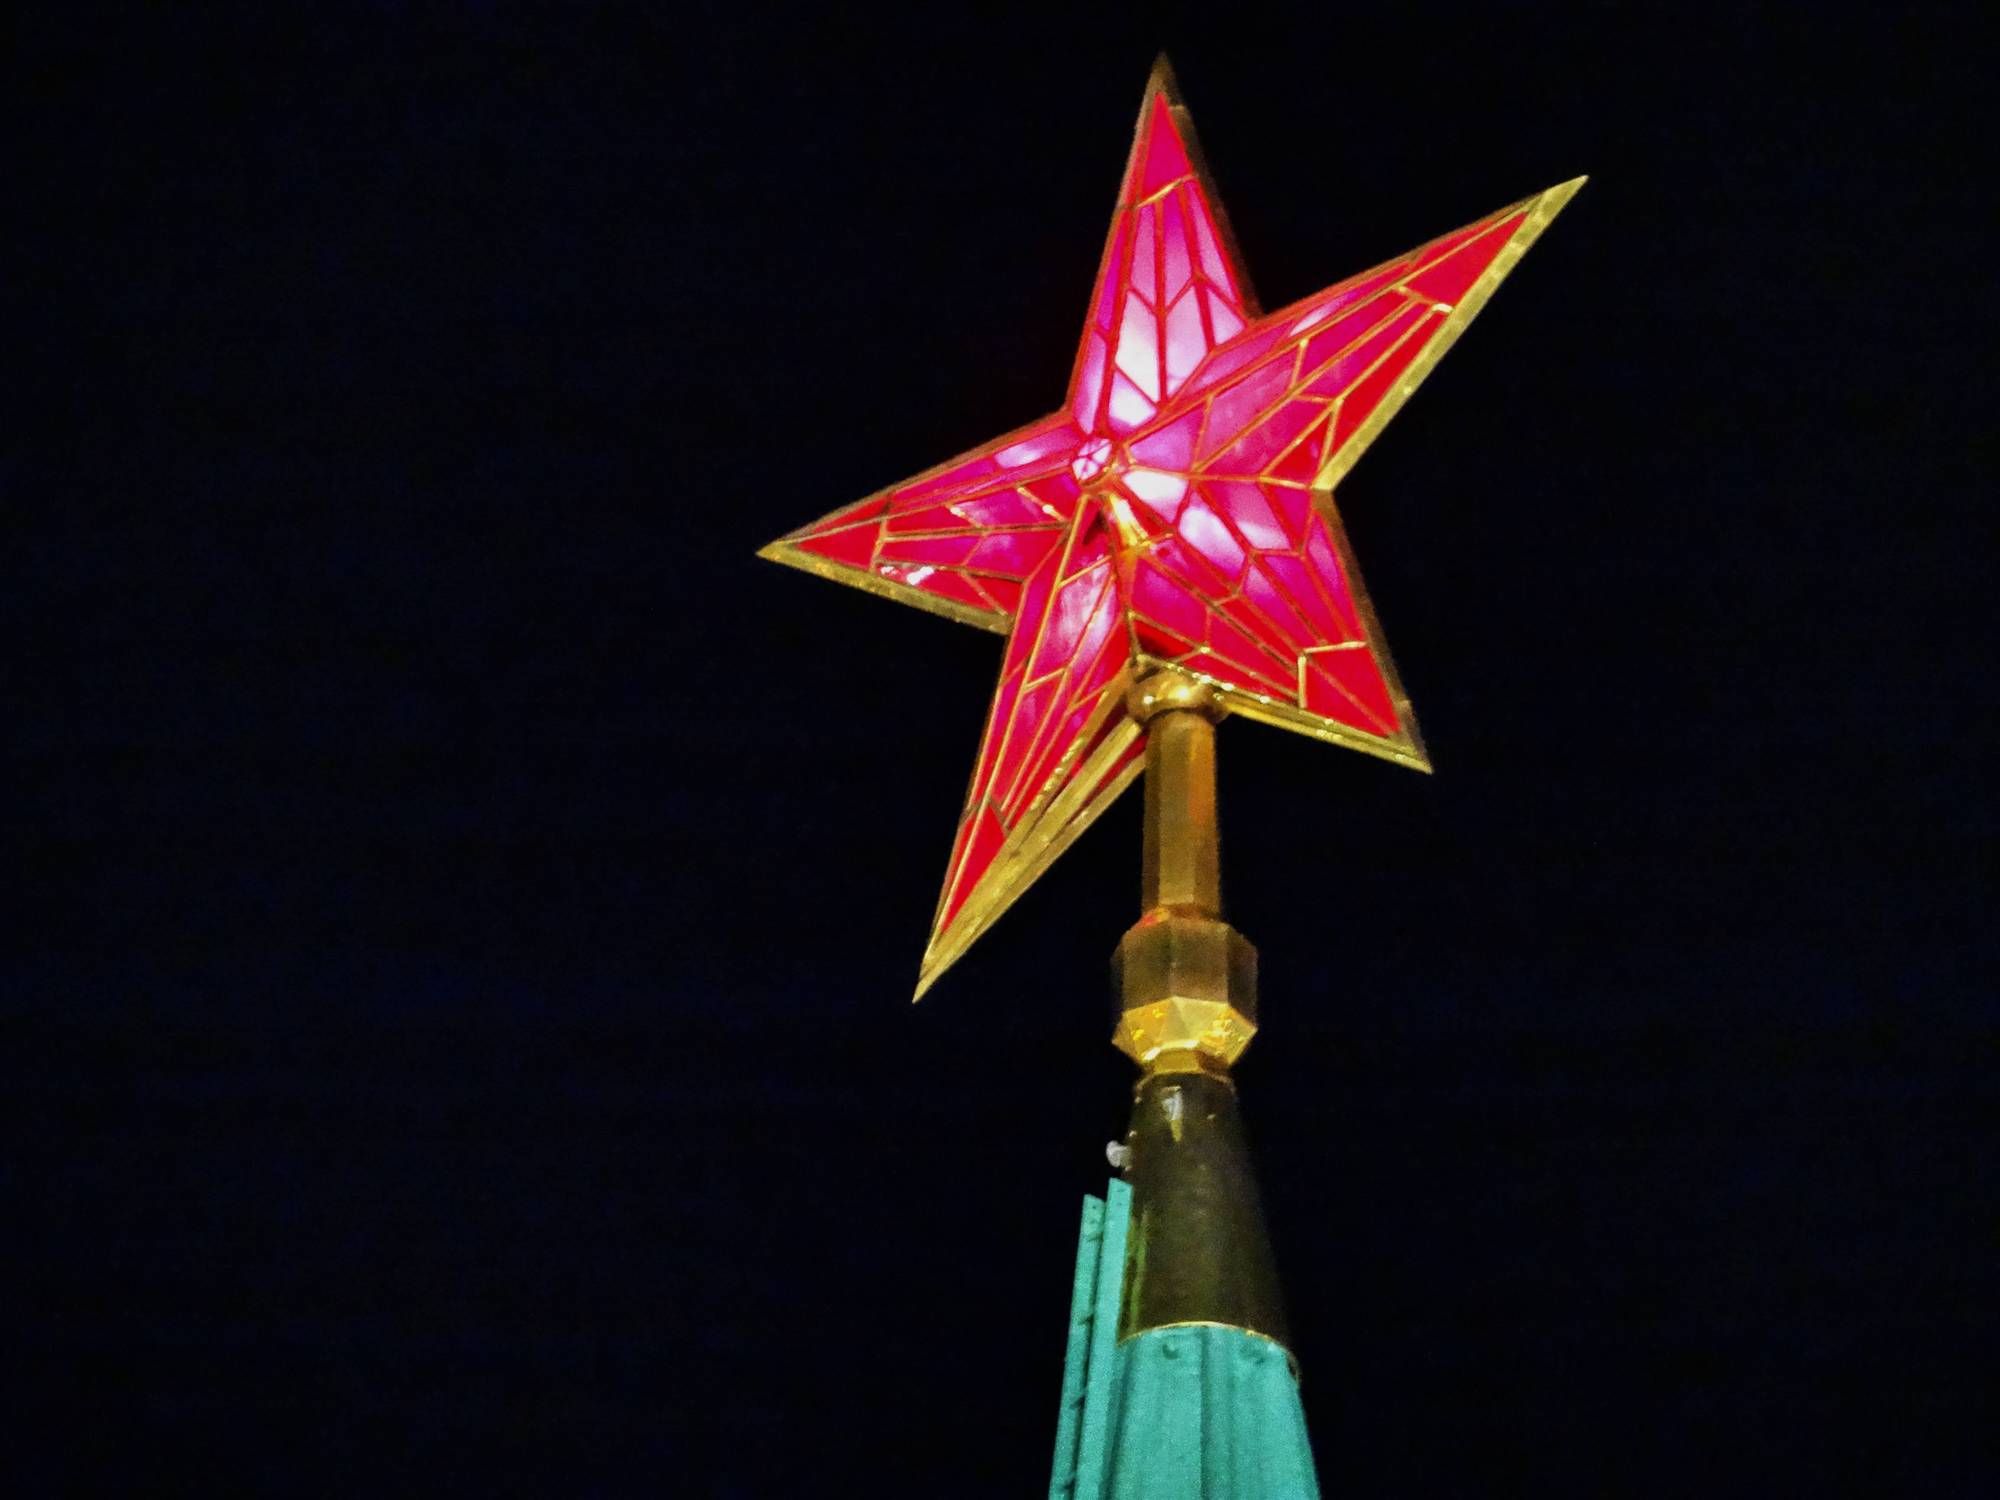 Red star, symbol of the communist revolution